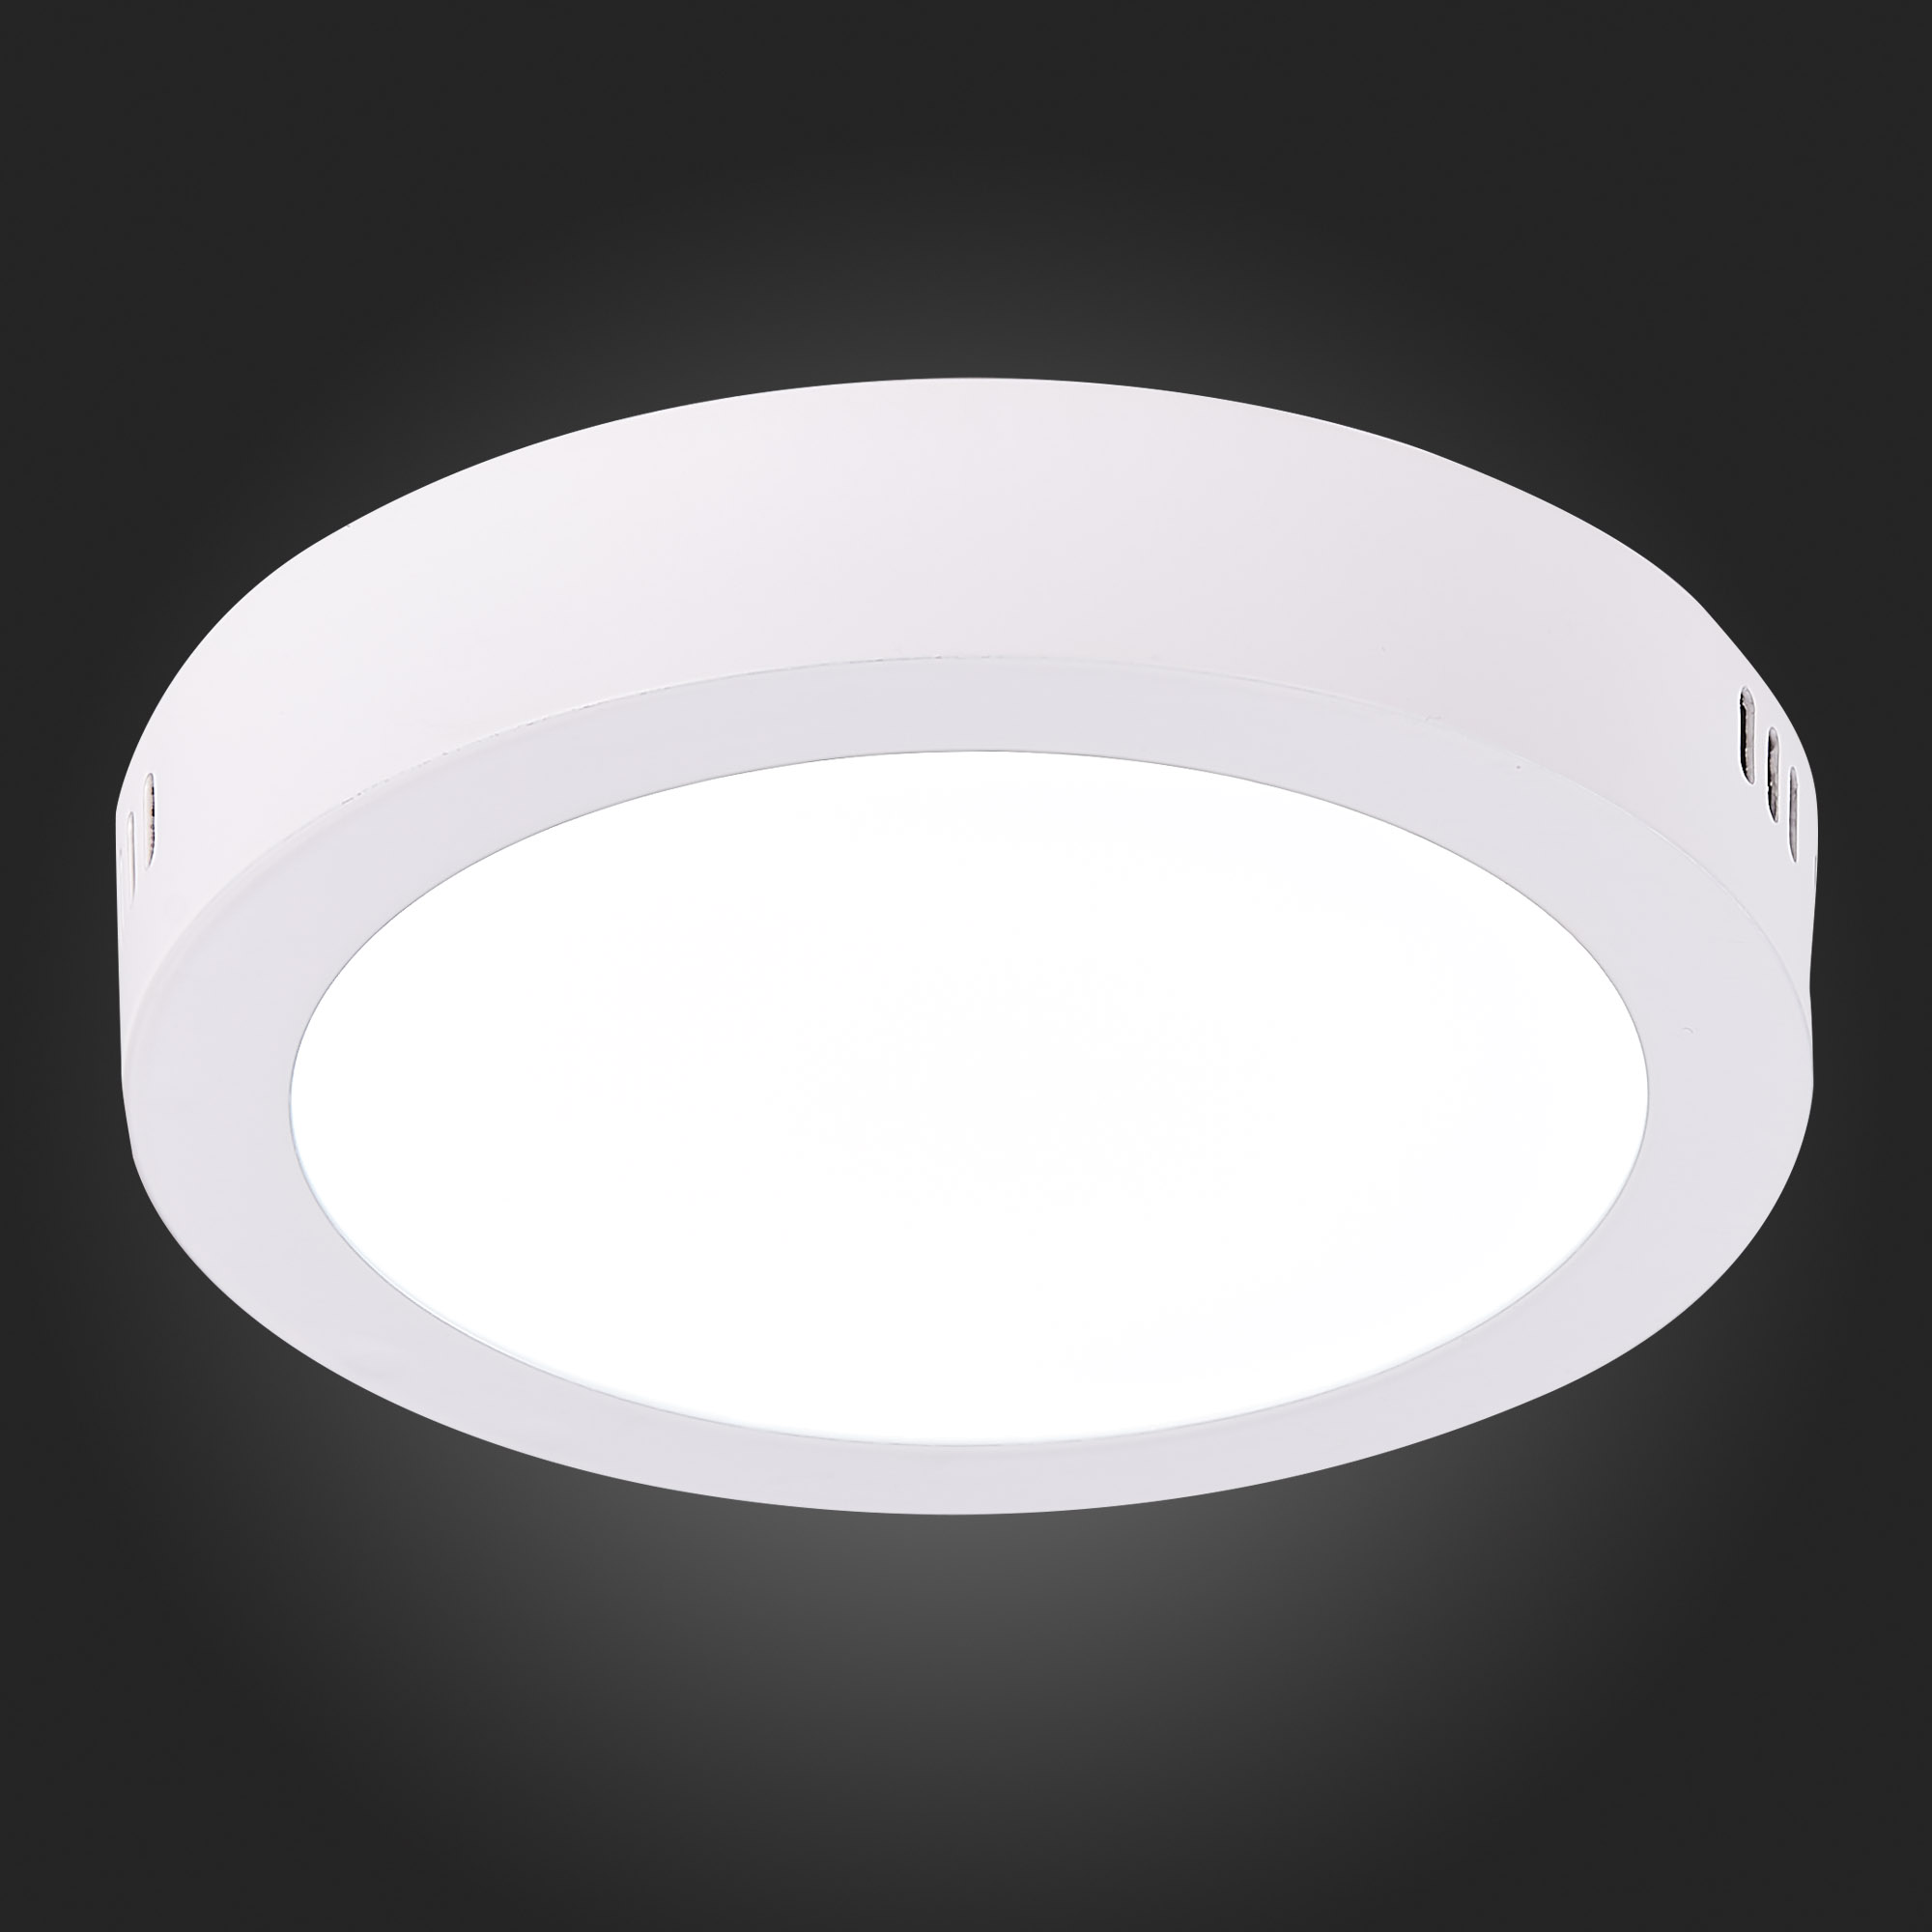 светильник настенно-потолочный st luce st112.542.12, артикул ST112.542.12